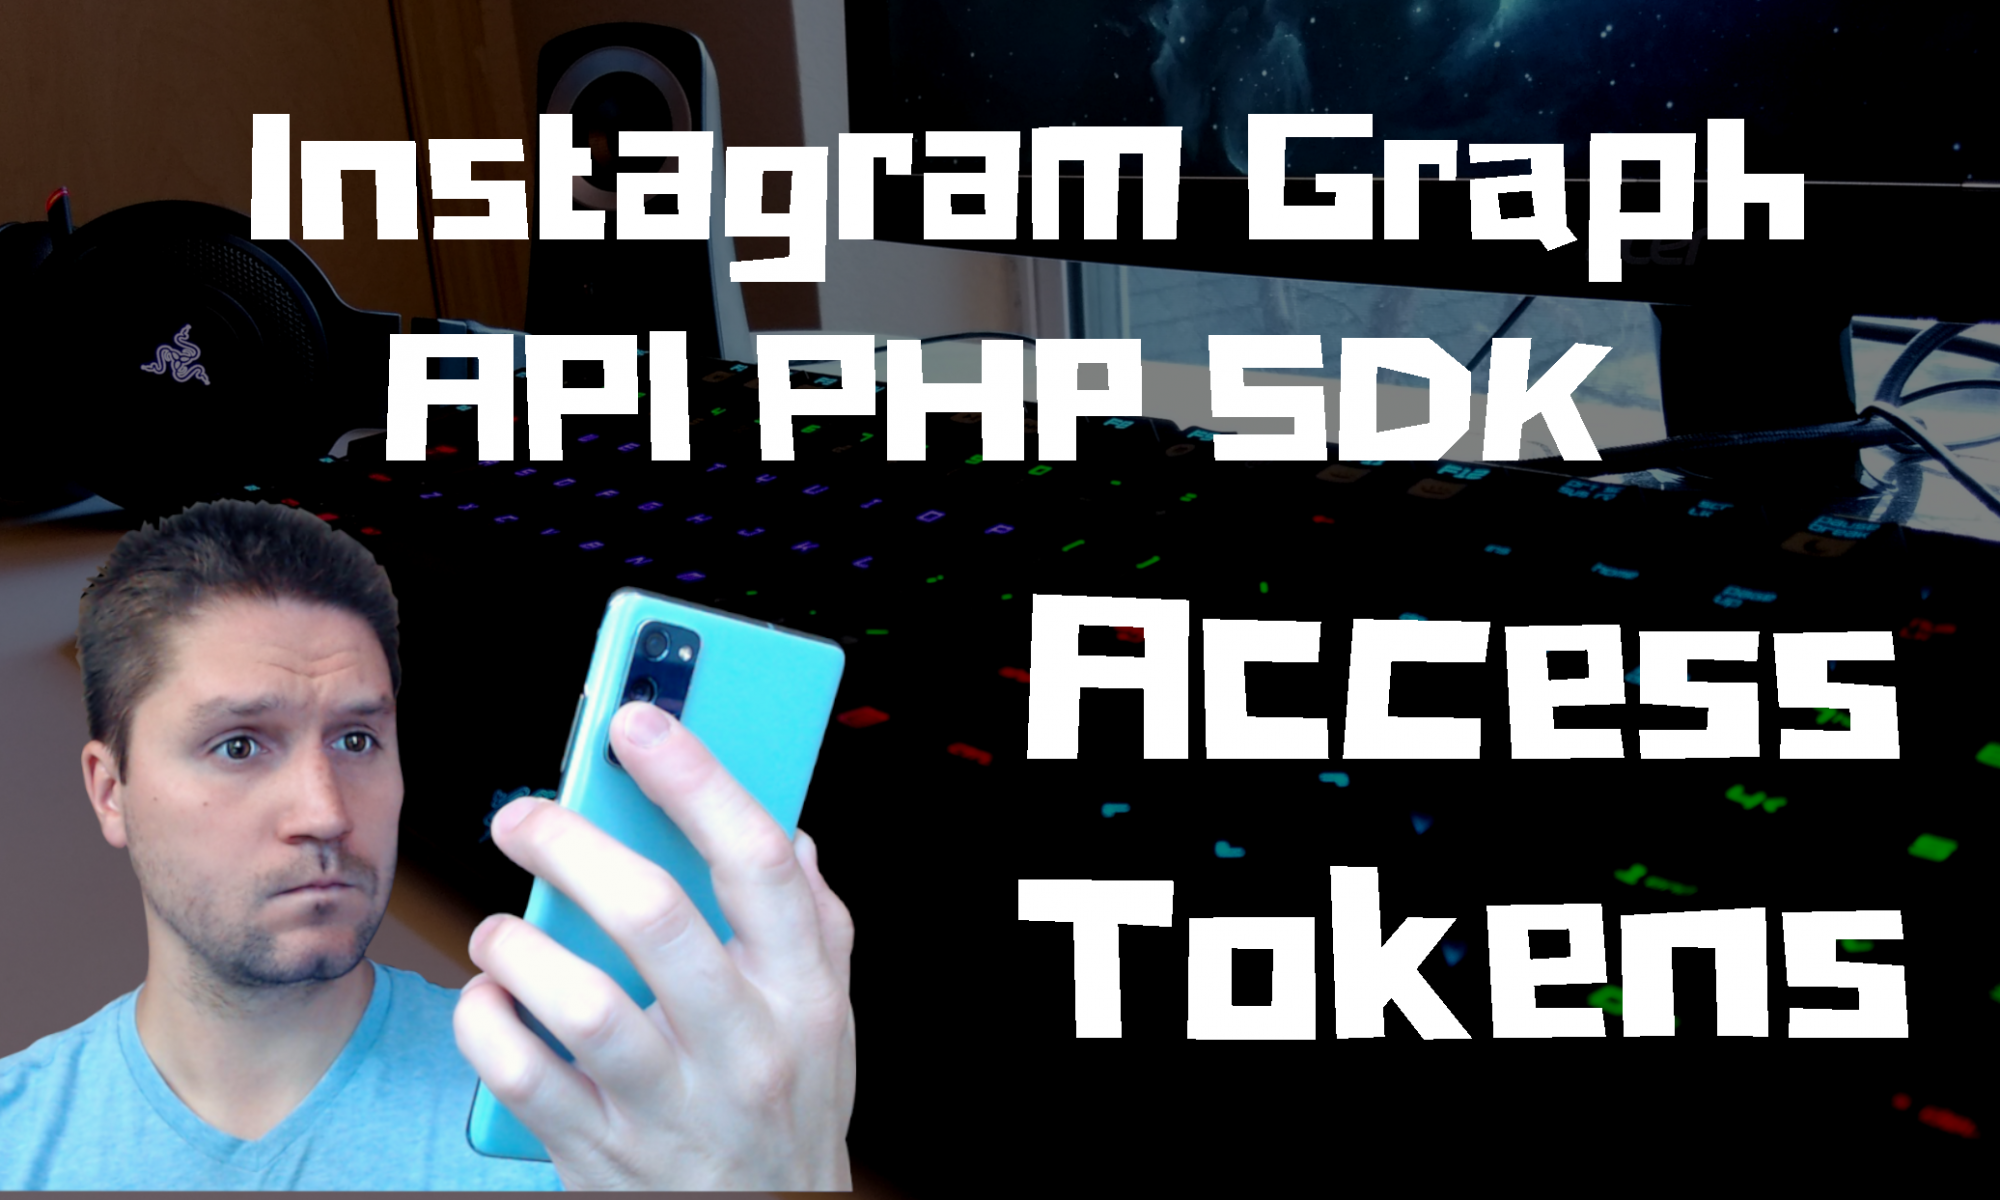 Instagram Graph API PHP SDK Access Tokens